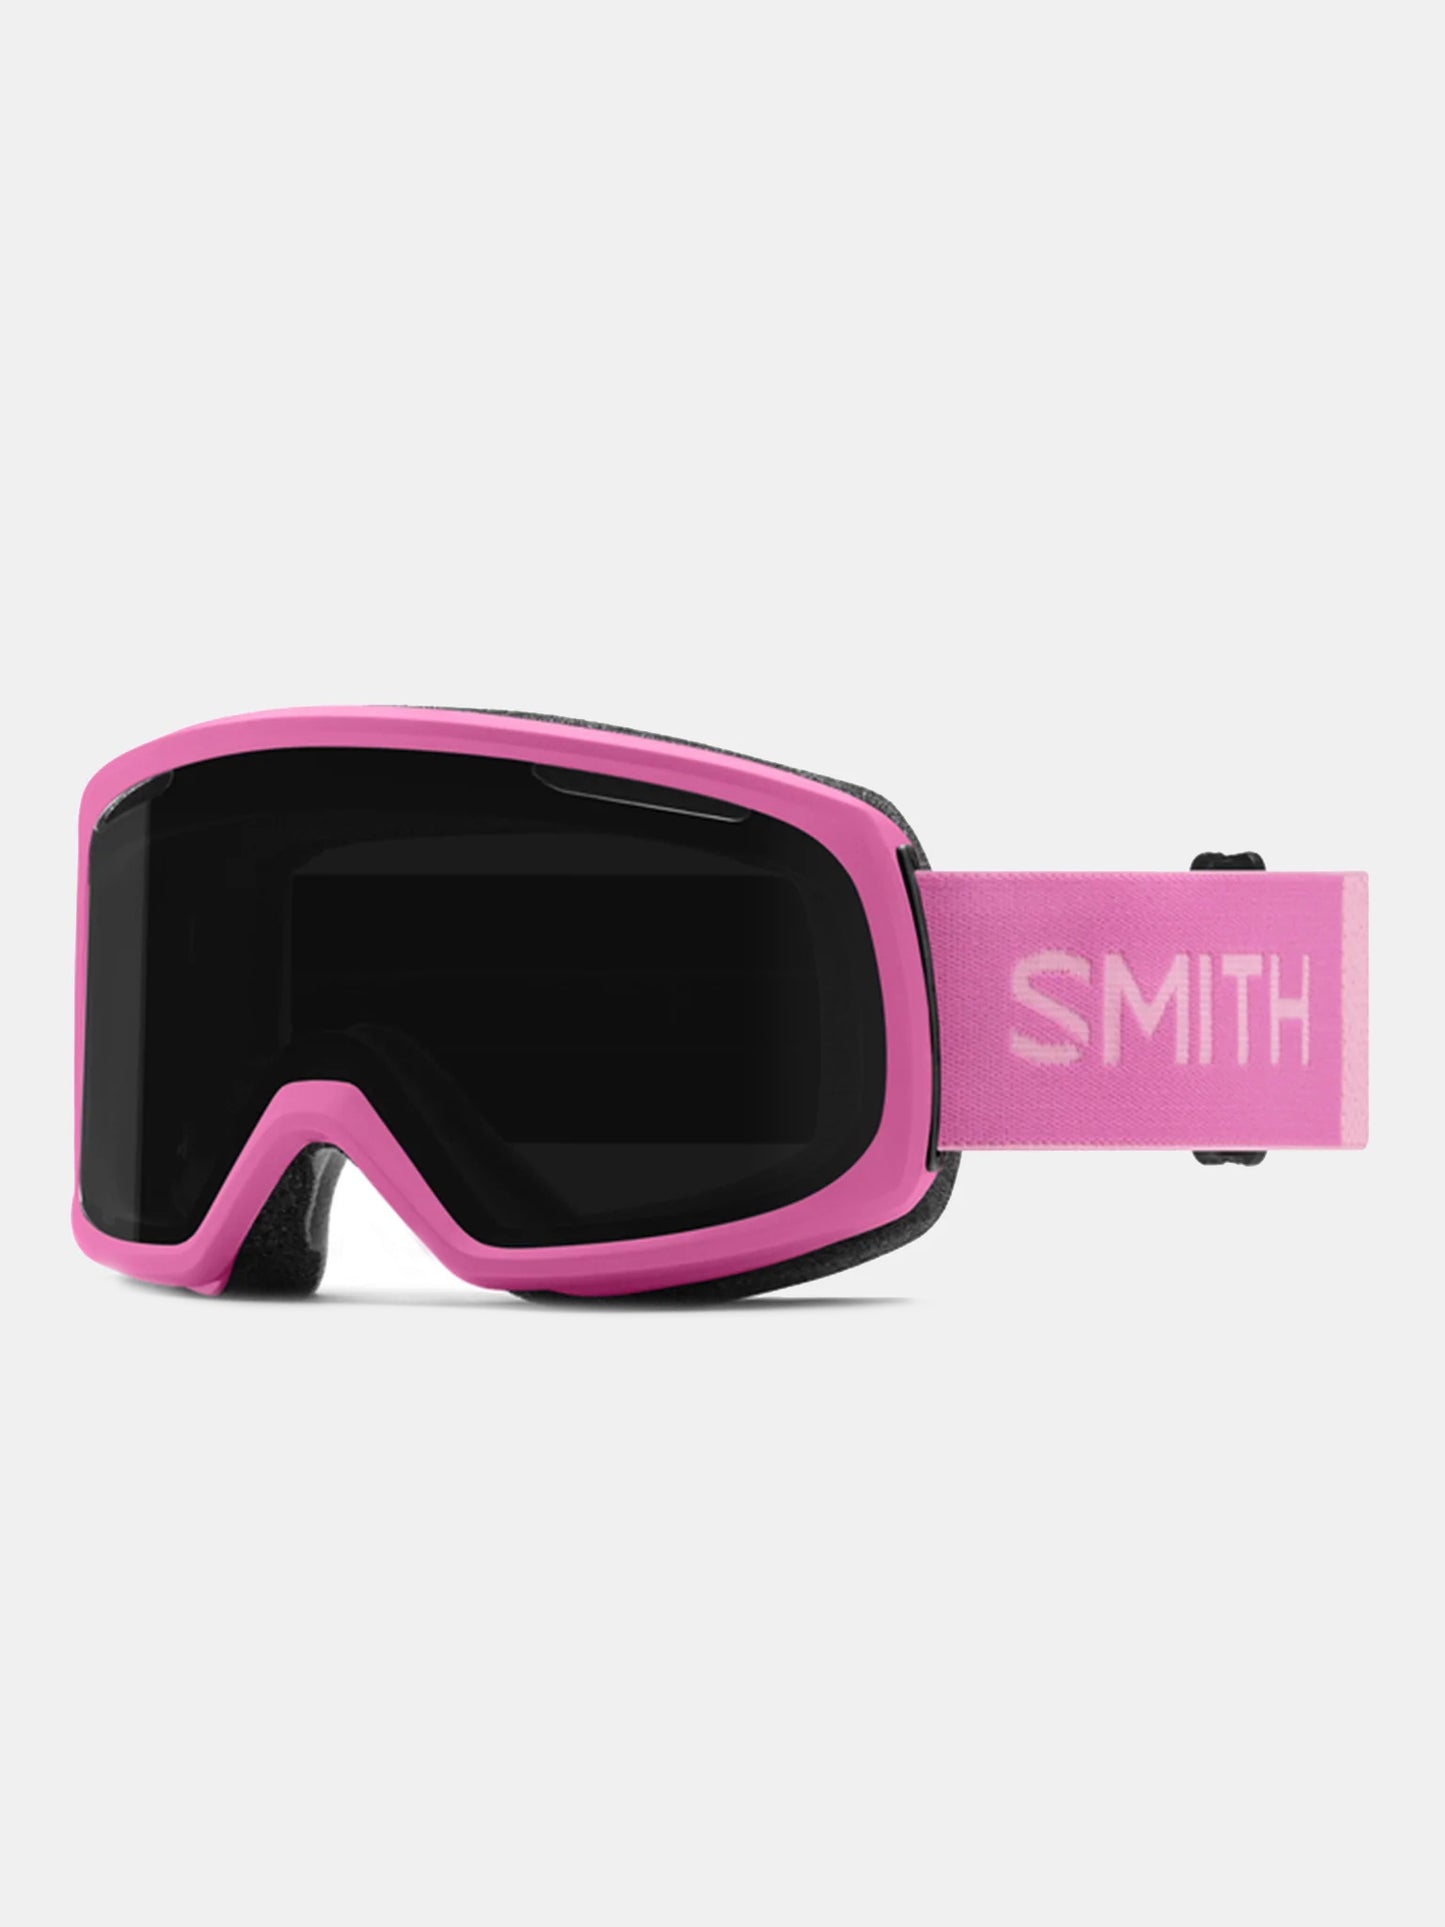 Smith Women's Riot Flamingo Goggles